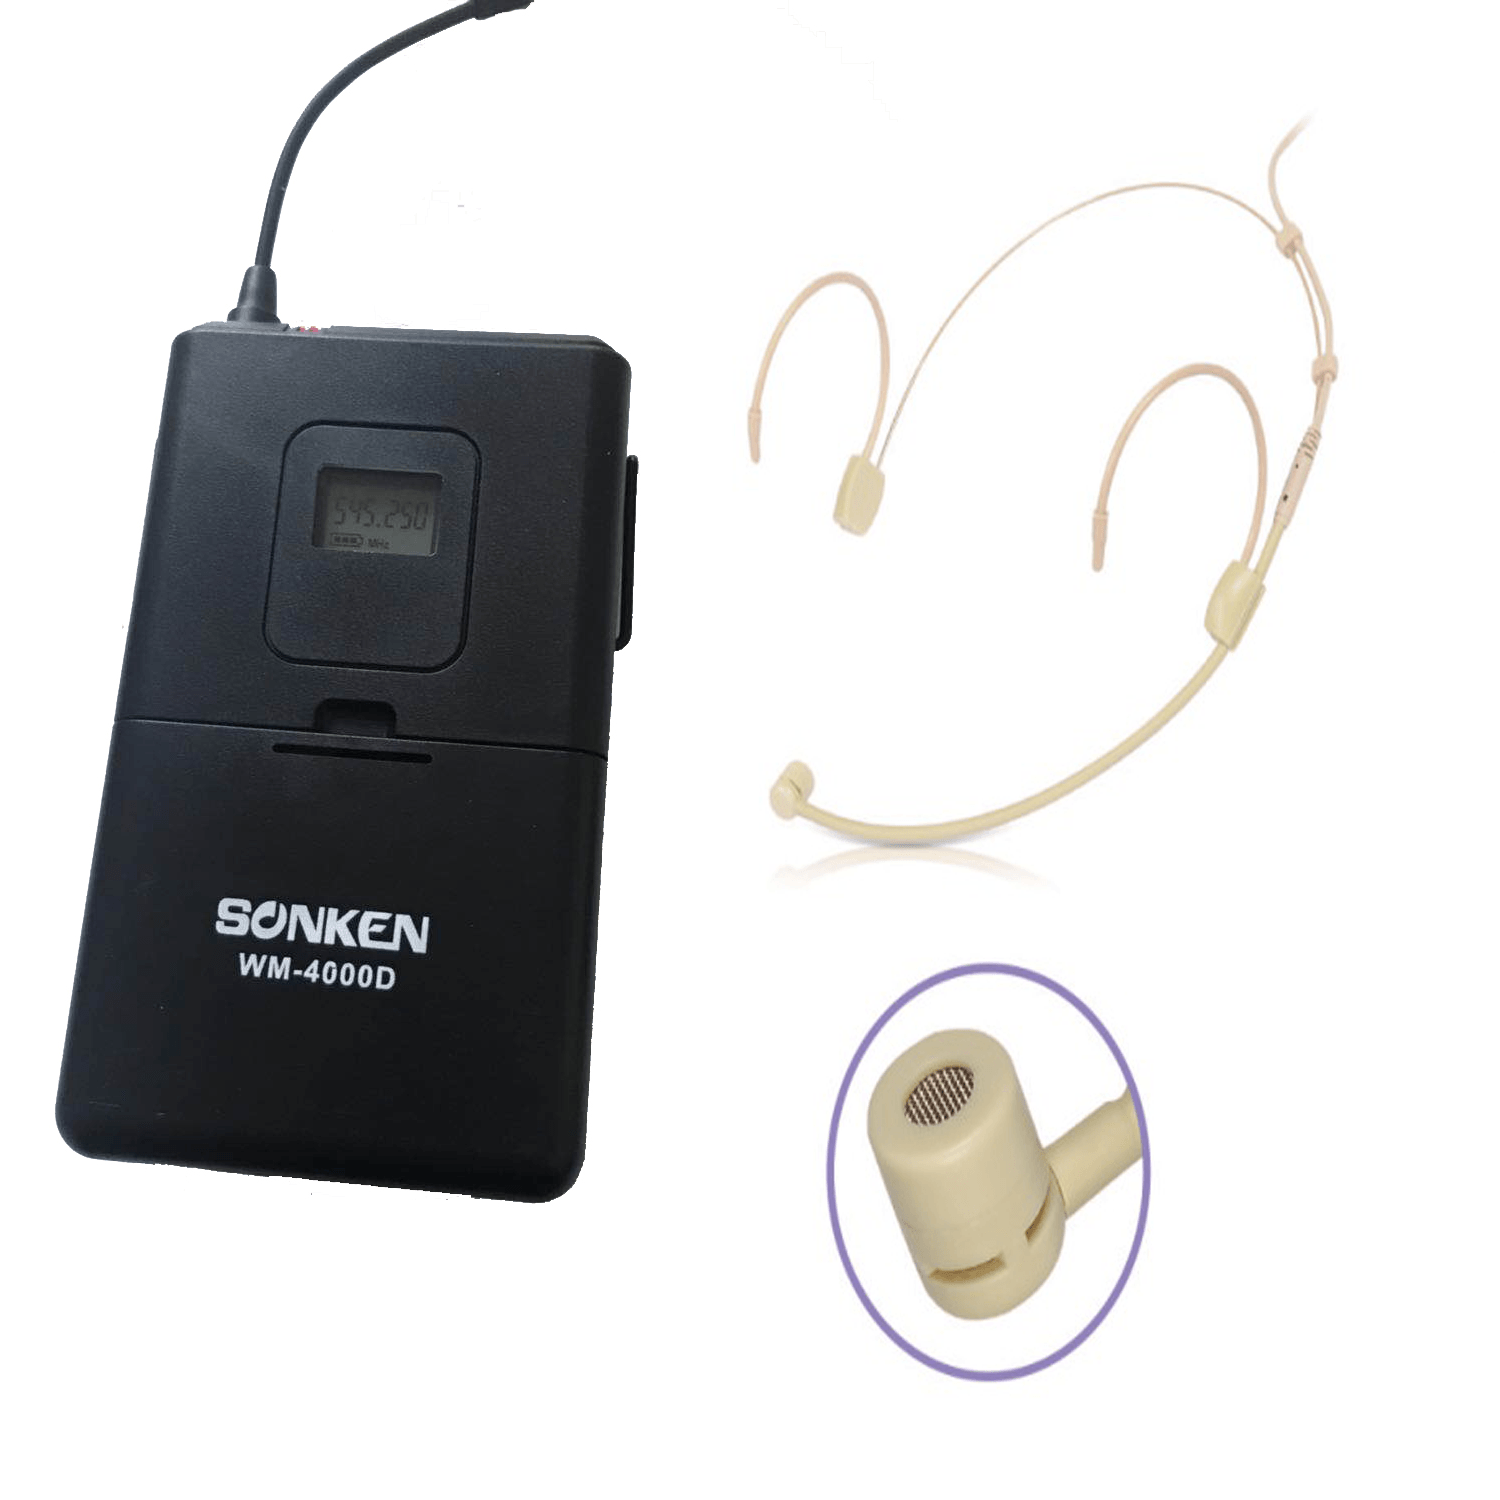 Sonken WM-4000D + Body Pack Headset - PRO 200 Channel UHF Wireless Microphones (2) + Body Pack & Headset Microphone - Karaoke Home Entertainment